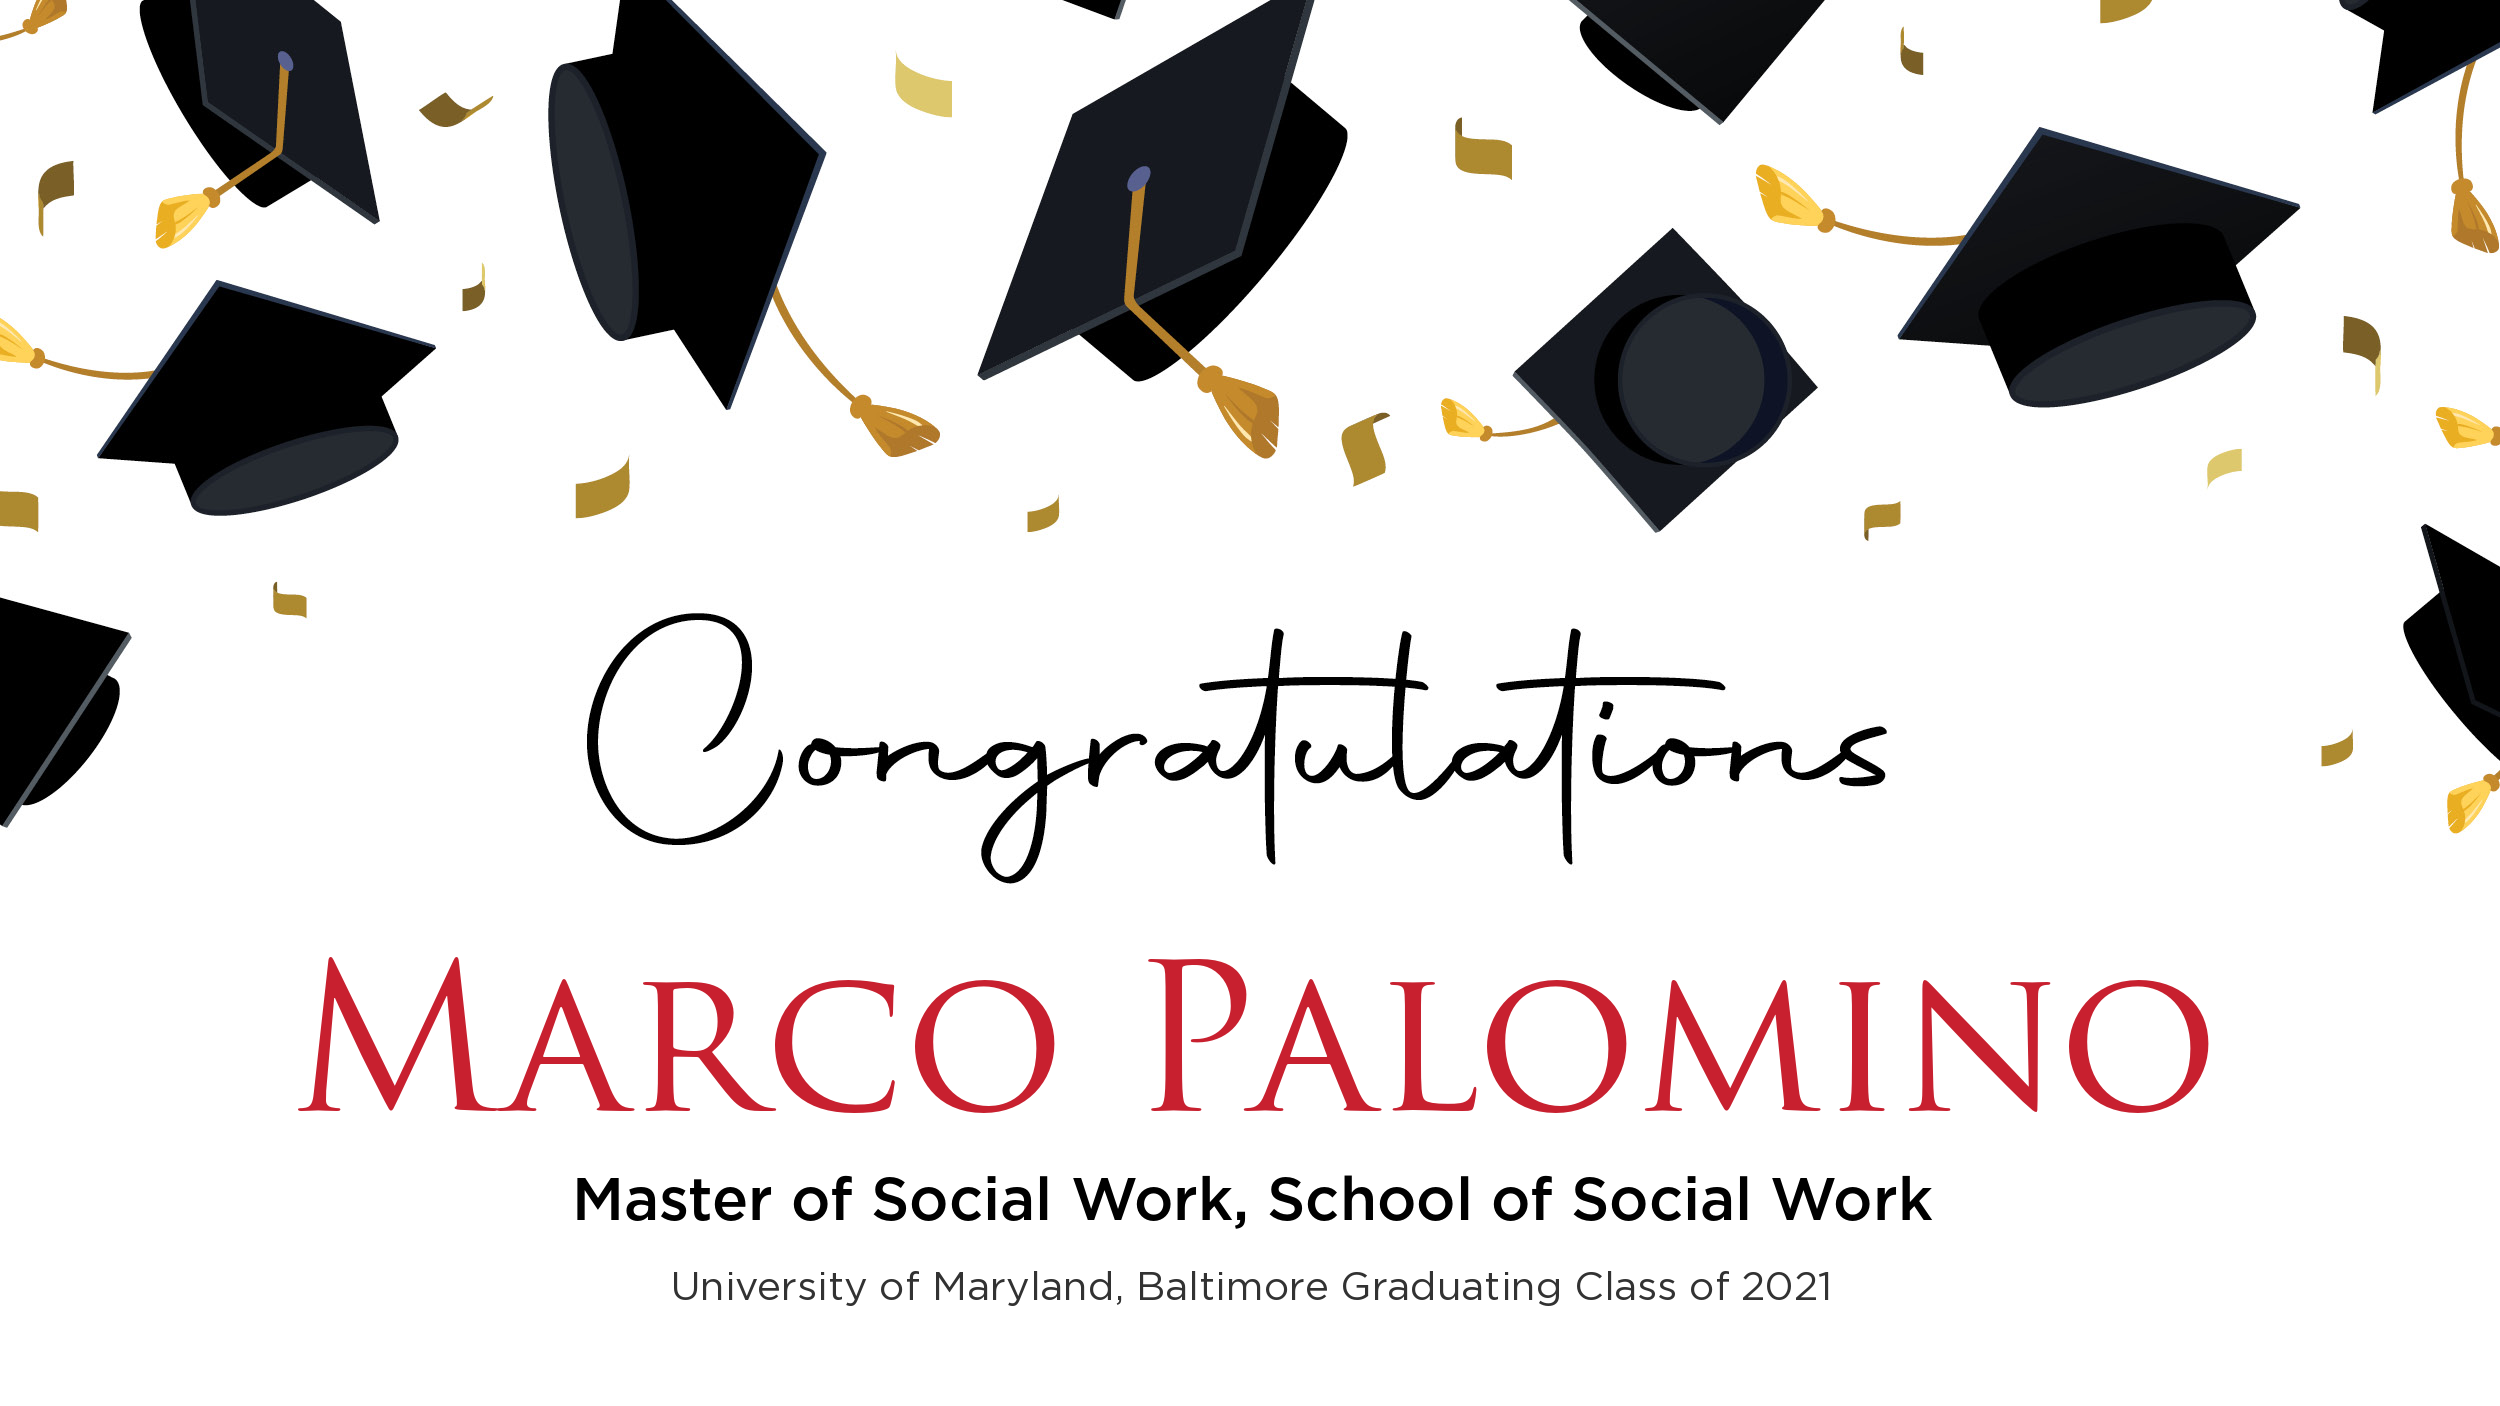 Congratulations Marco Palomino, Master of Social Work